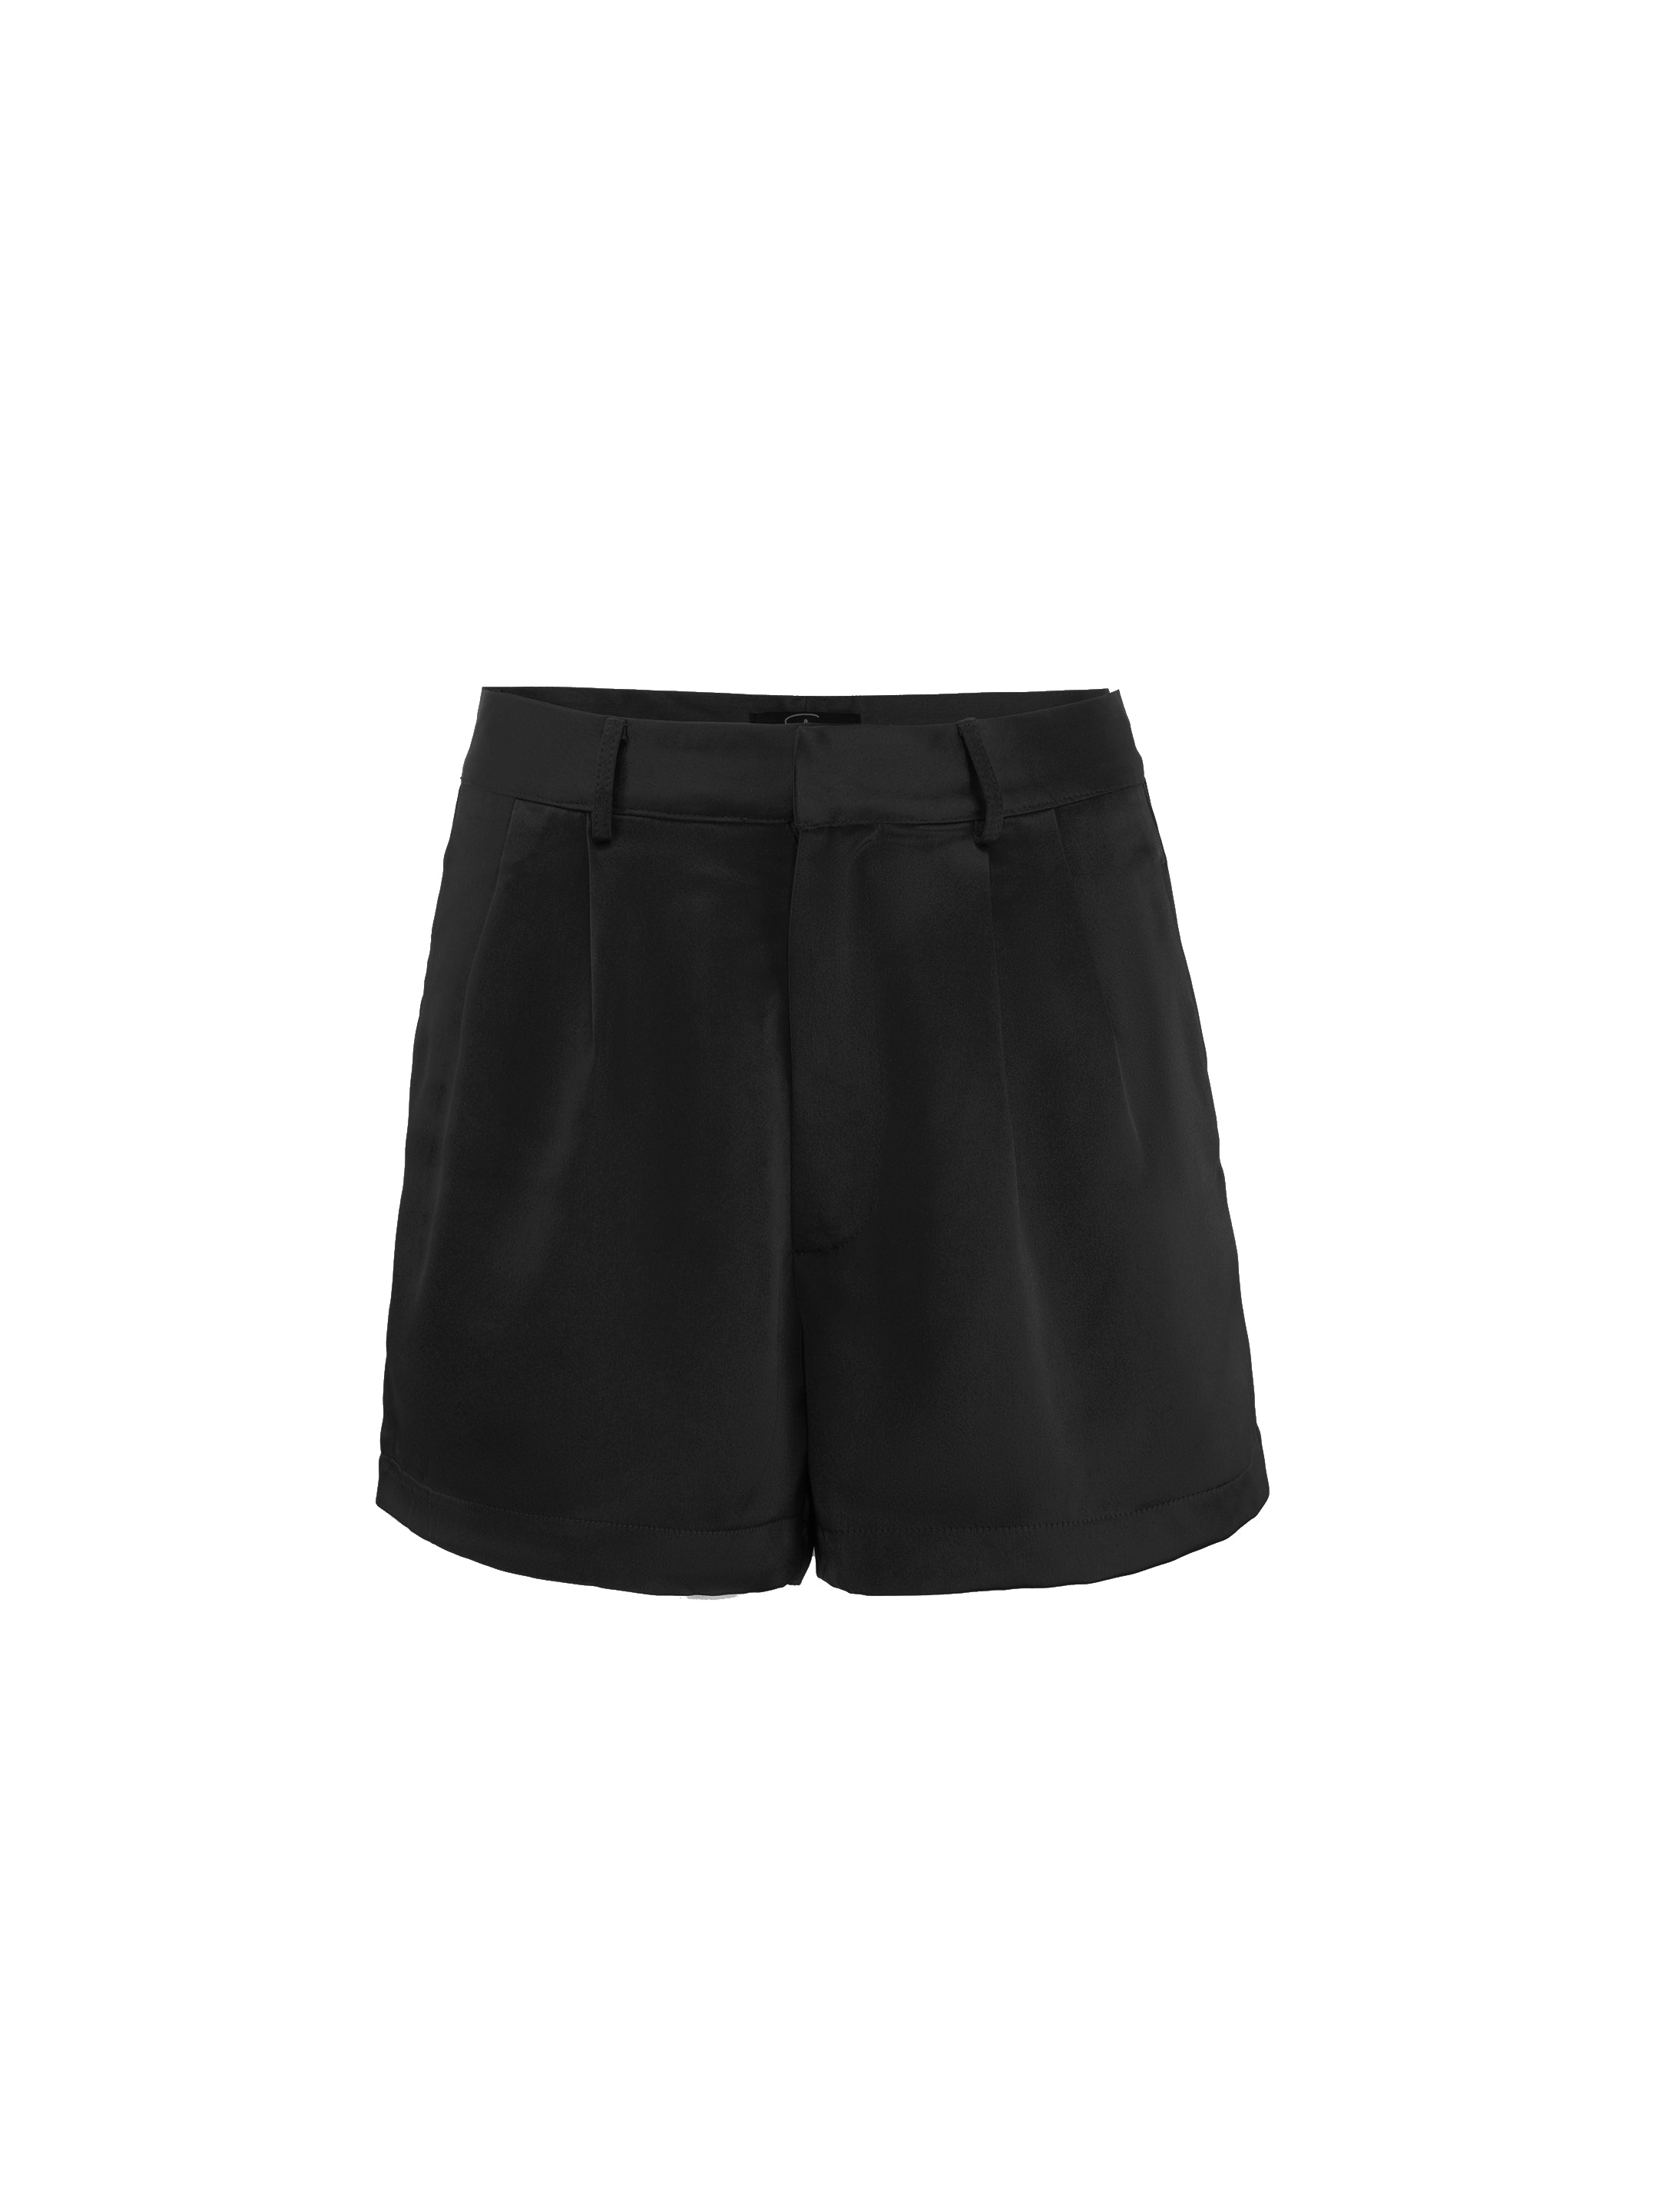 Very Sexy Ultra Silk Satin Shorts - Hong Gi (Special Series) - Black  Special Hong Gi / Small